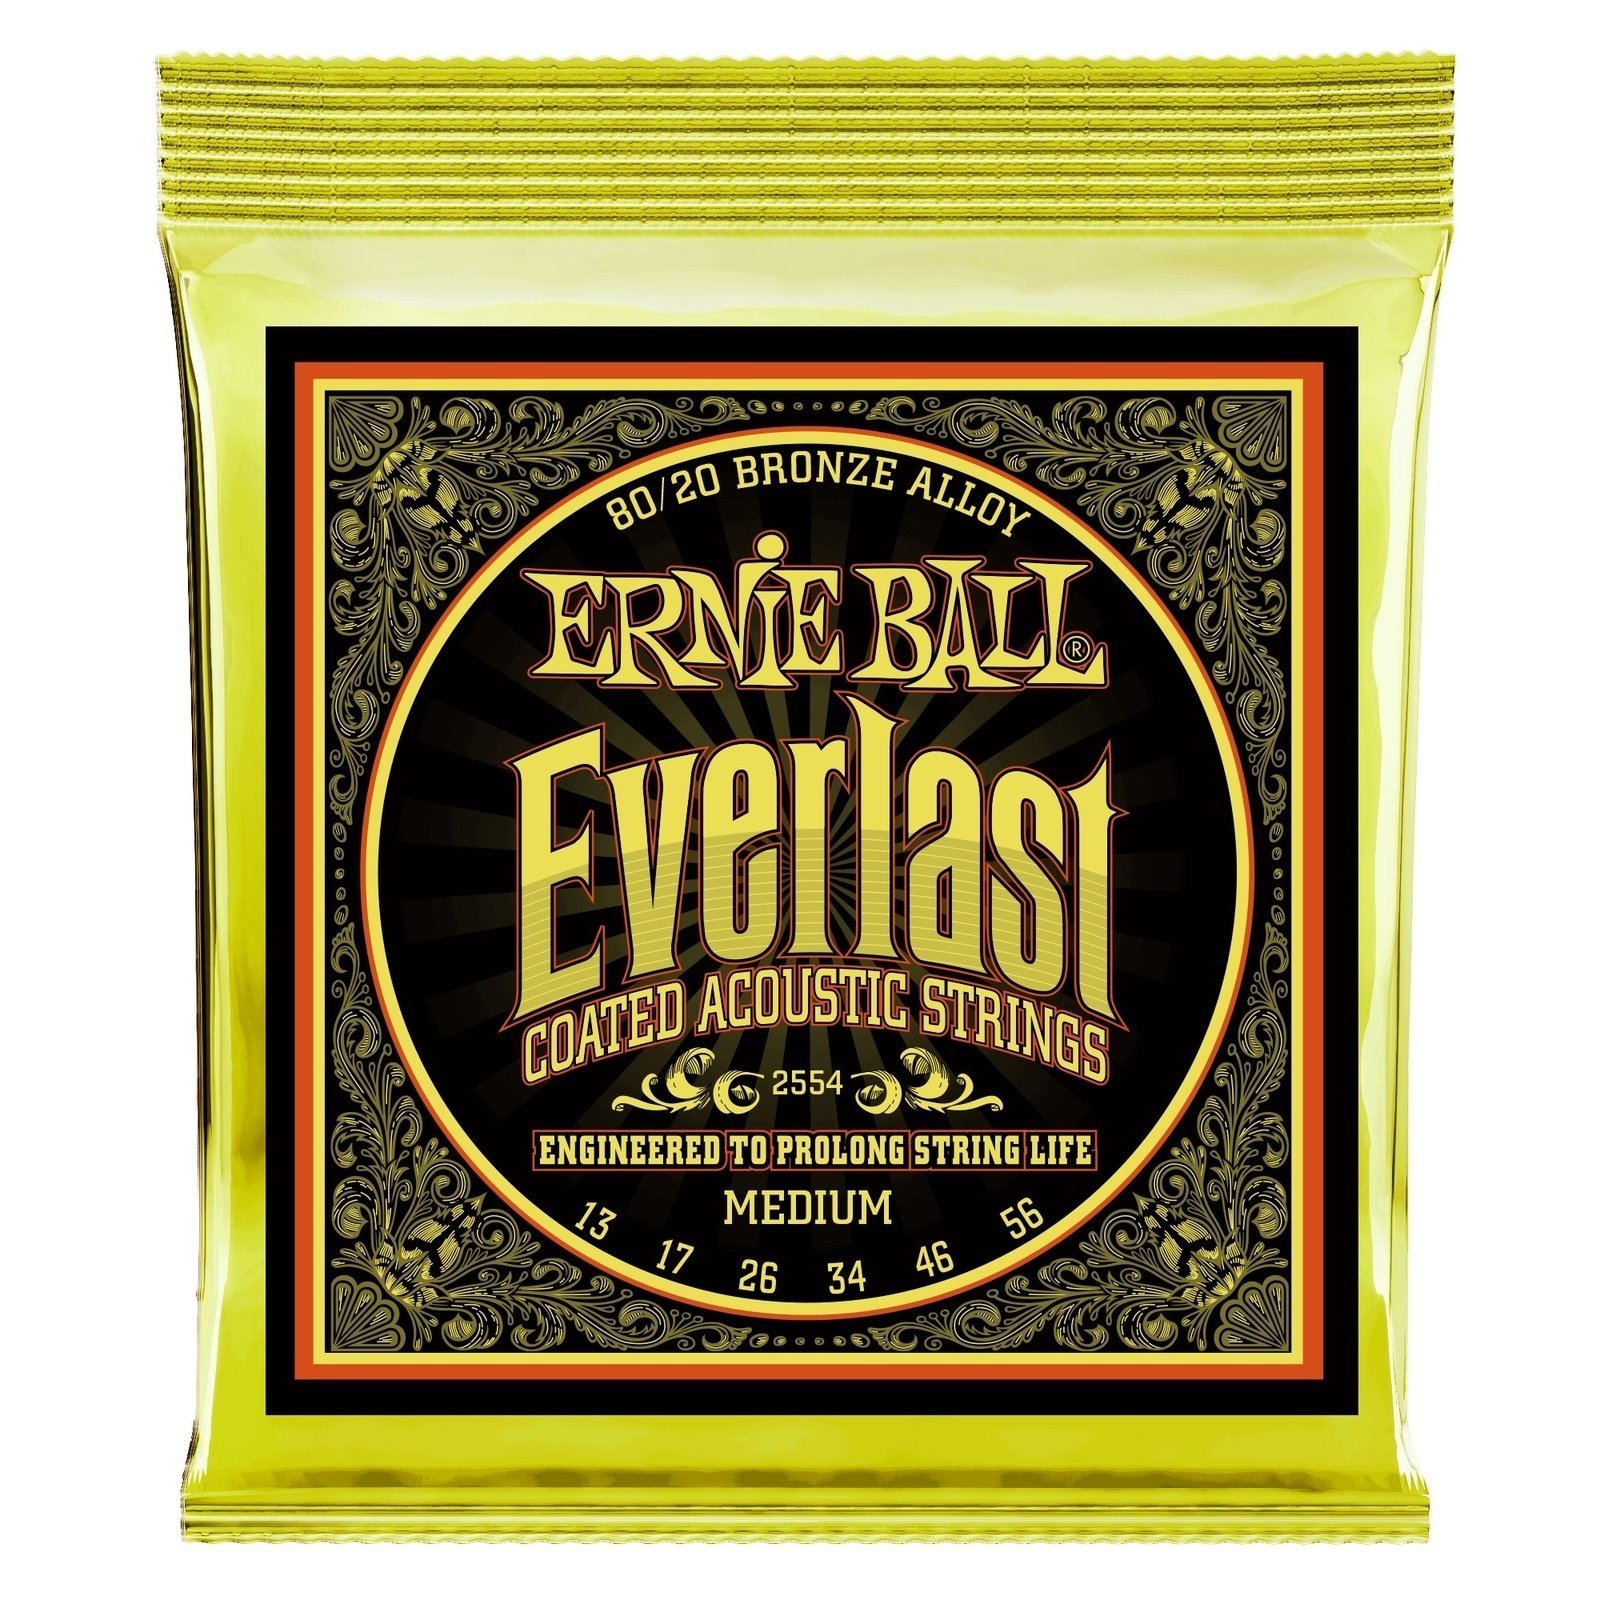 Ernie Ball 2554 Everlast